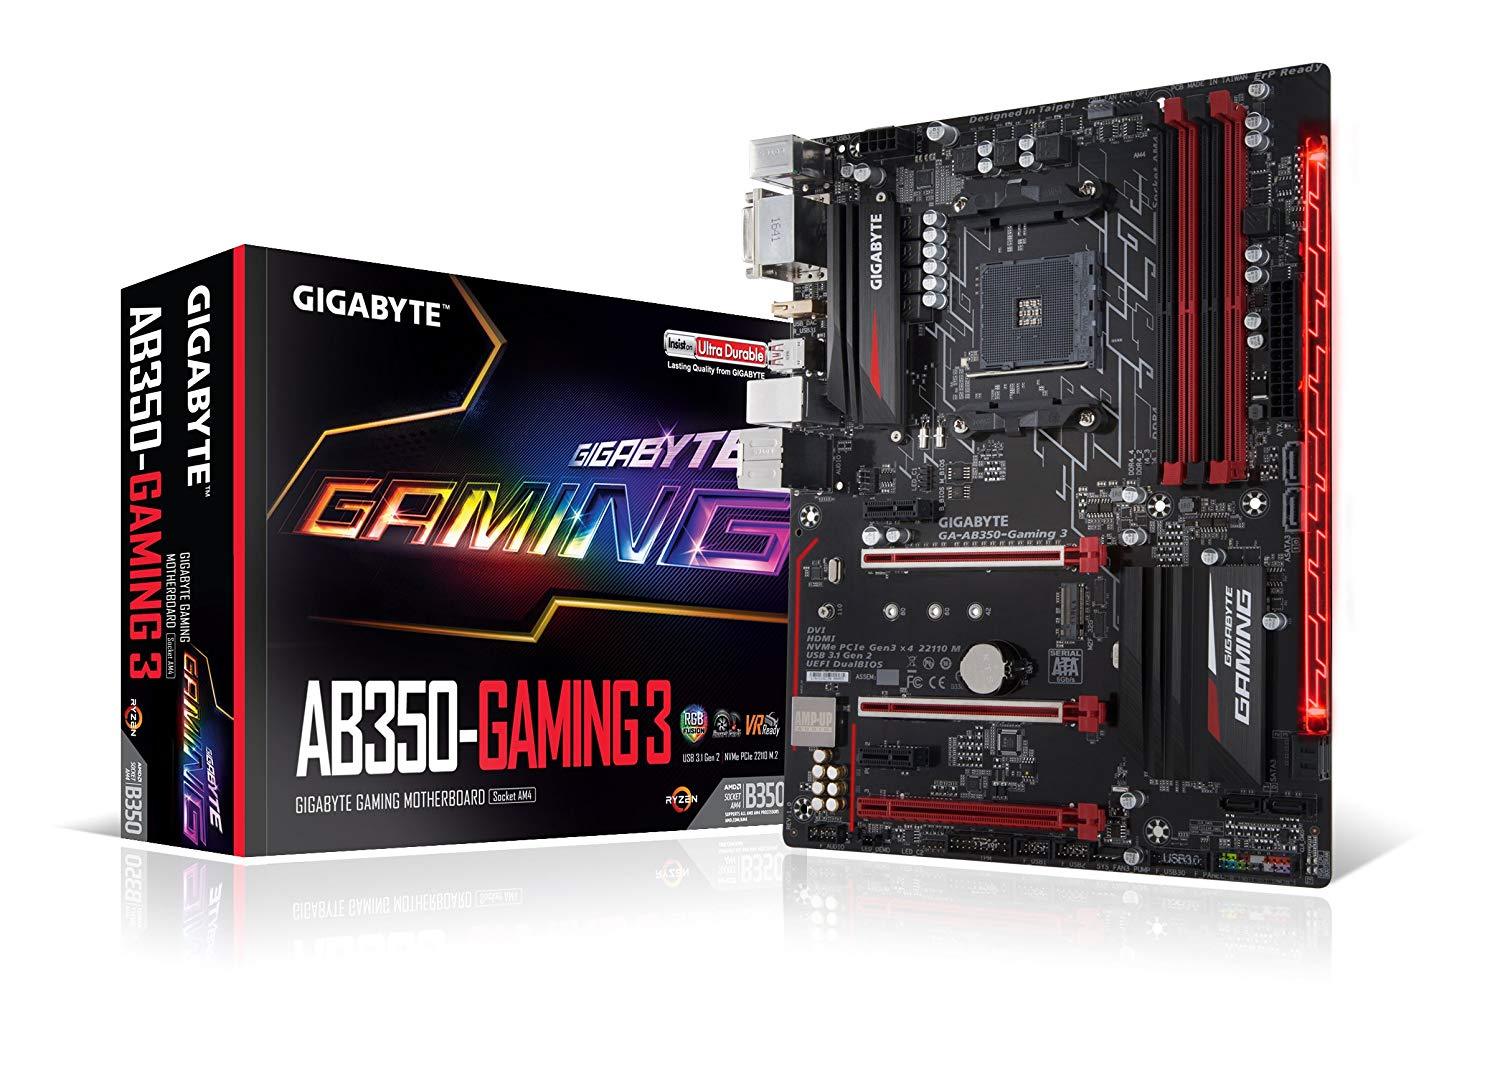 Gigabyte GA-AB350-Gaming 3 - AMD AM4 ATX Motherboard - Store 974 | ستور ٩٧٤